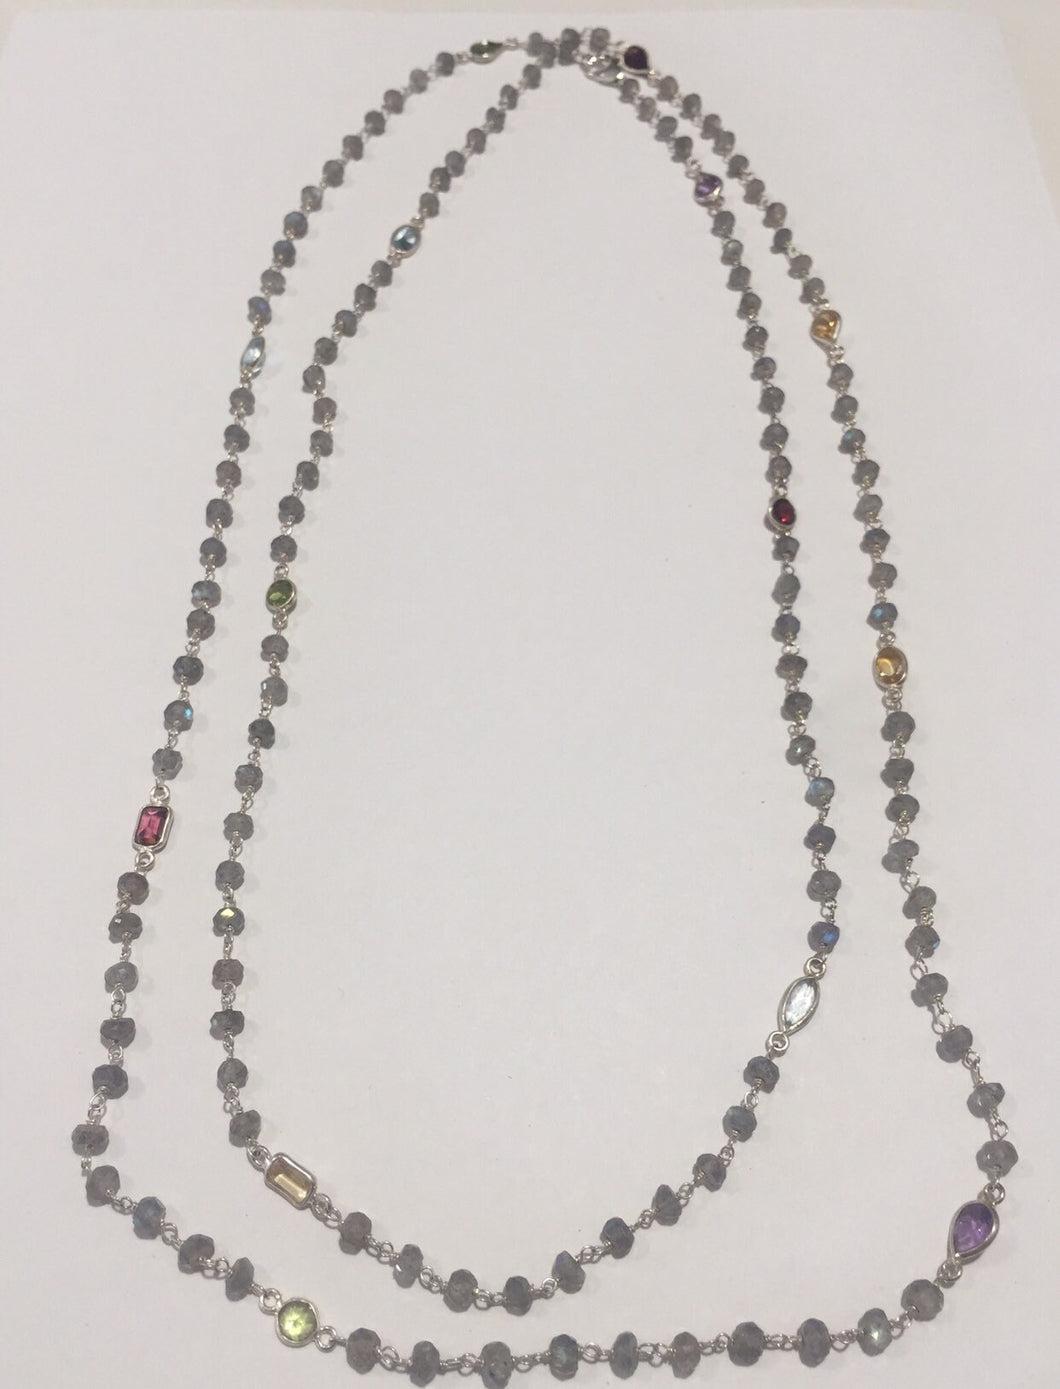 stone beads necklace,labradorite necklace,bead necklace,gem stone necklace,silver necklace, multi stone necklace,cut stone necklace